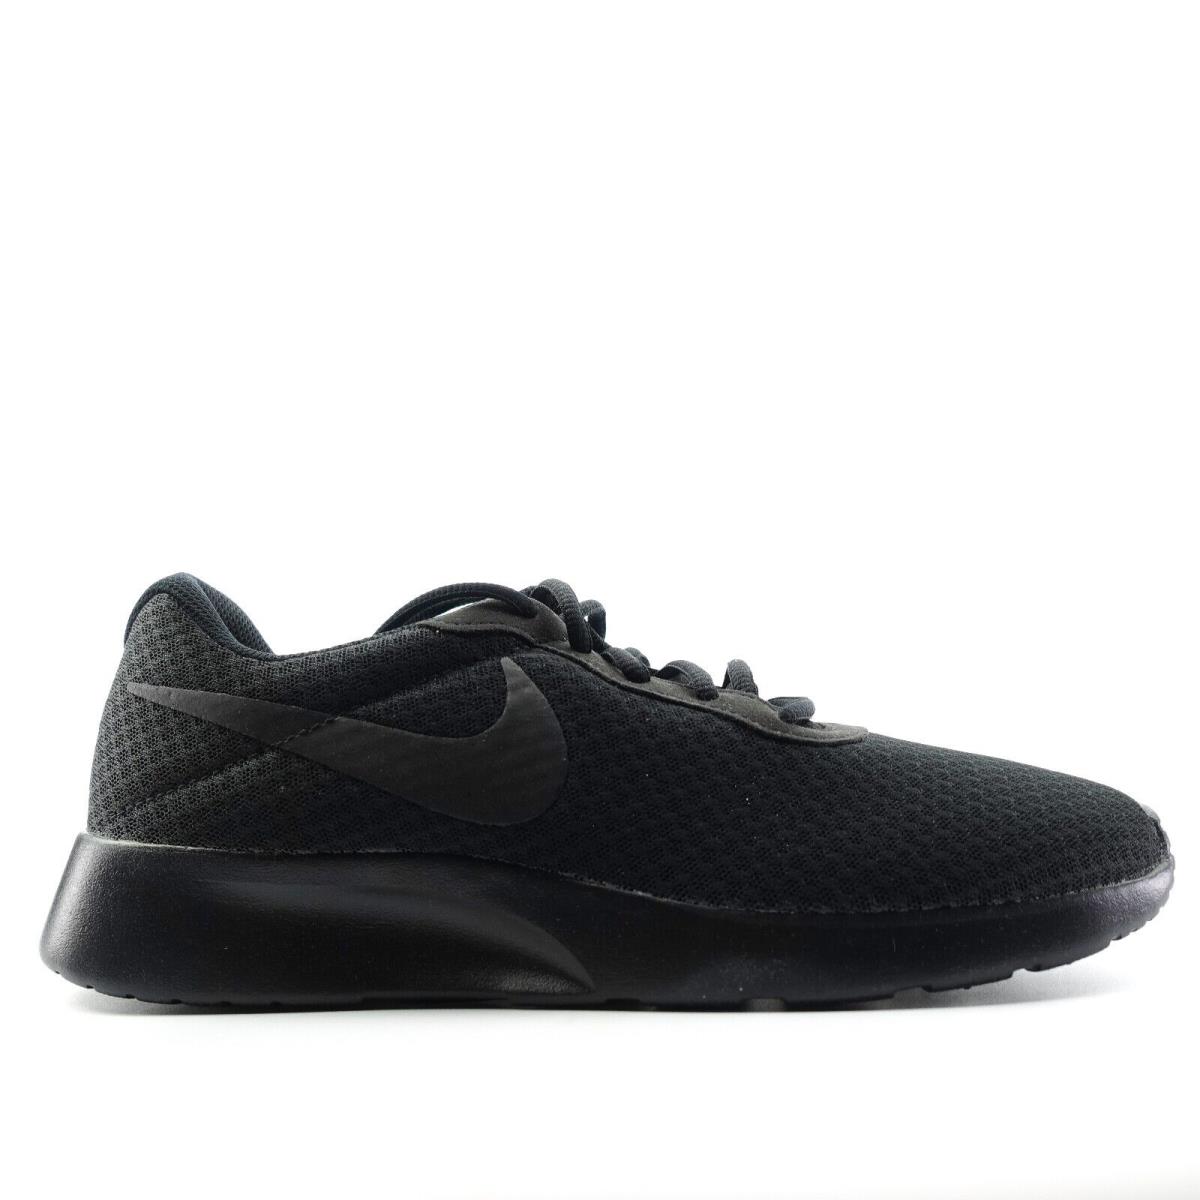 Womens Nike Tanjun Triple Black Running Shoe 812655 002 Size 10.5 - Black